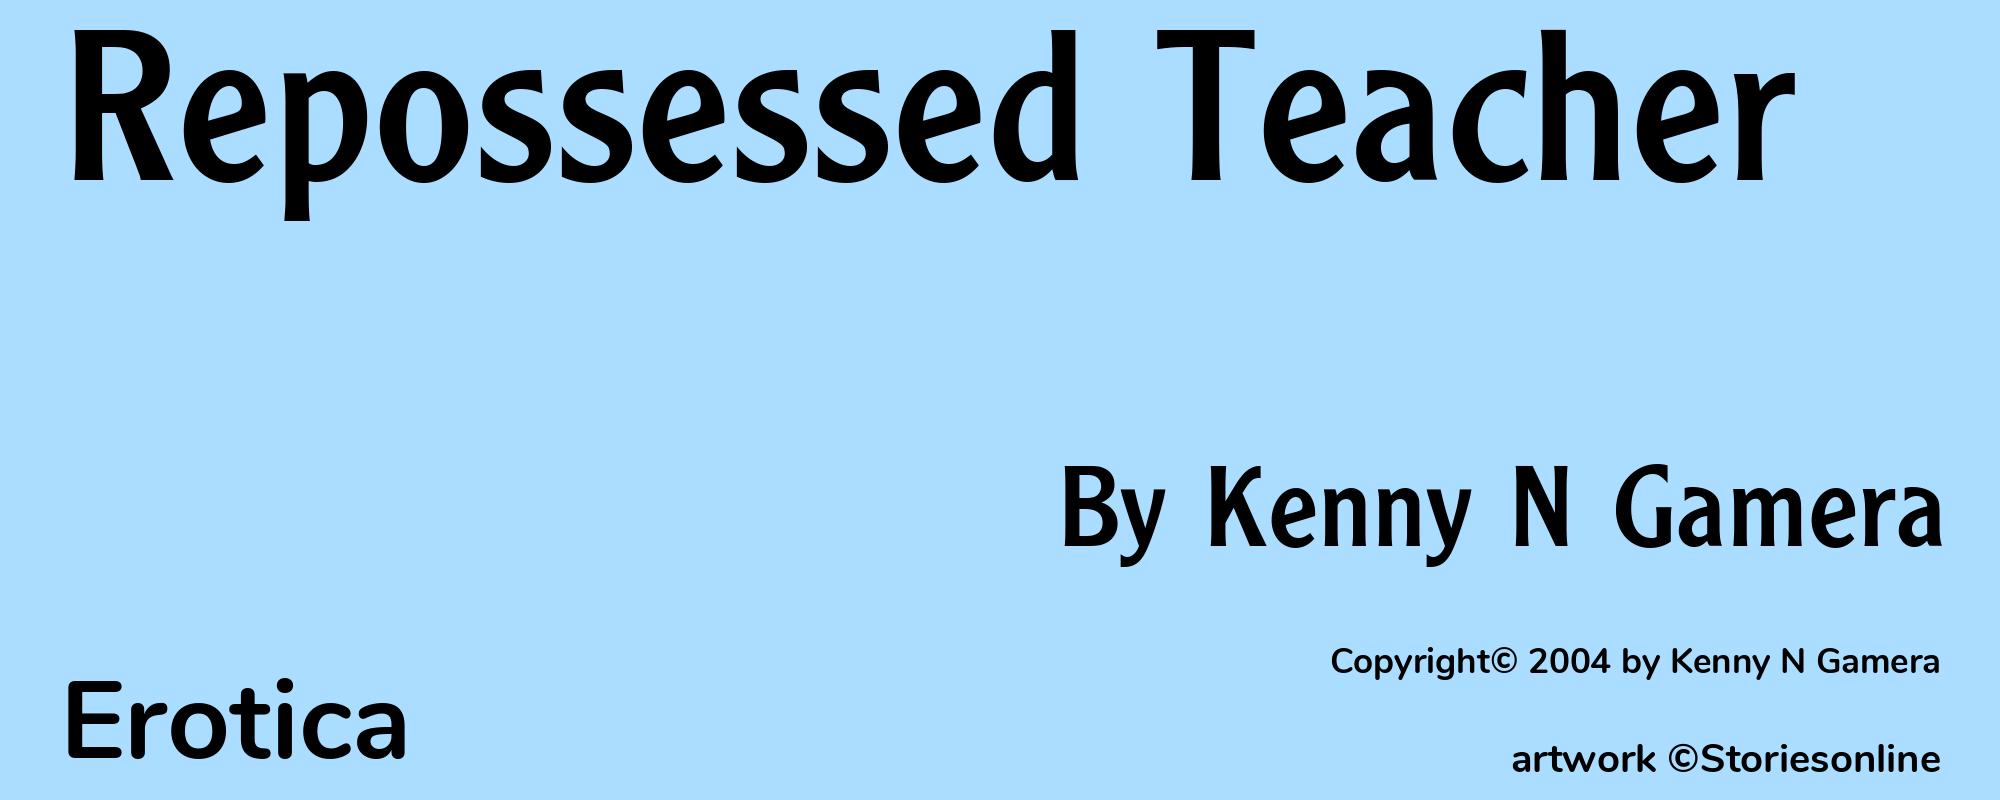 Repossessed Teacher - Cover